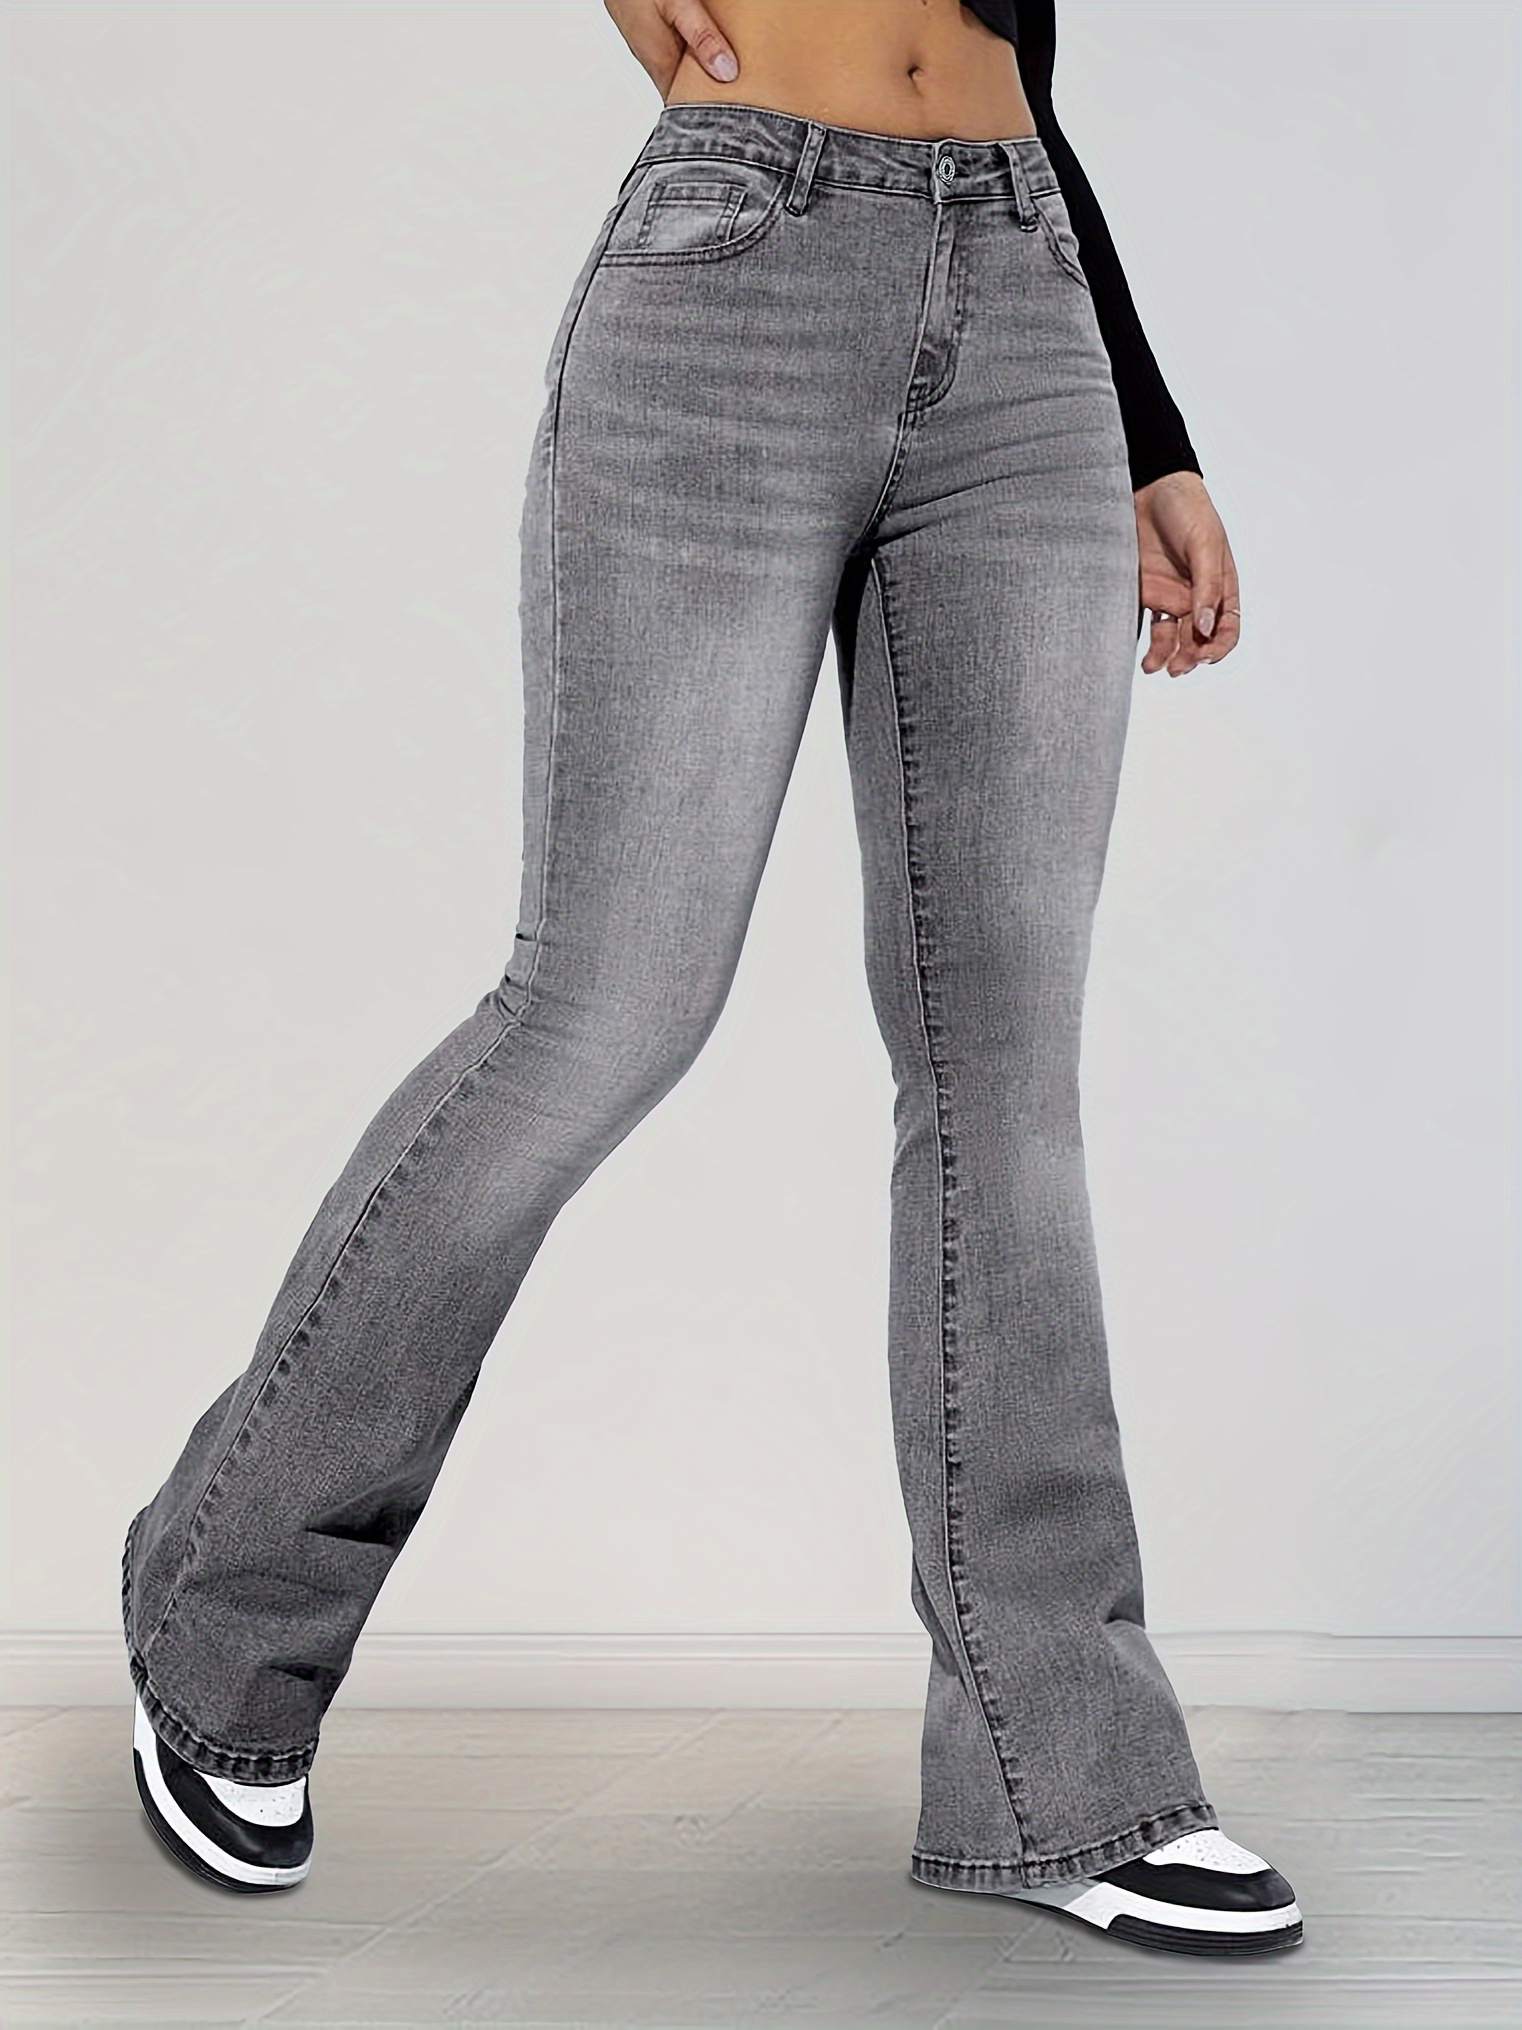 Gibobby Jeans Pantalones de mujer Pantalones vaqueros clásicos para mujer,  informales, ajustados, de cintura alta, color gris , pantalones(Gris  oscuro,M)